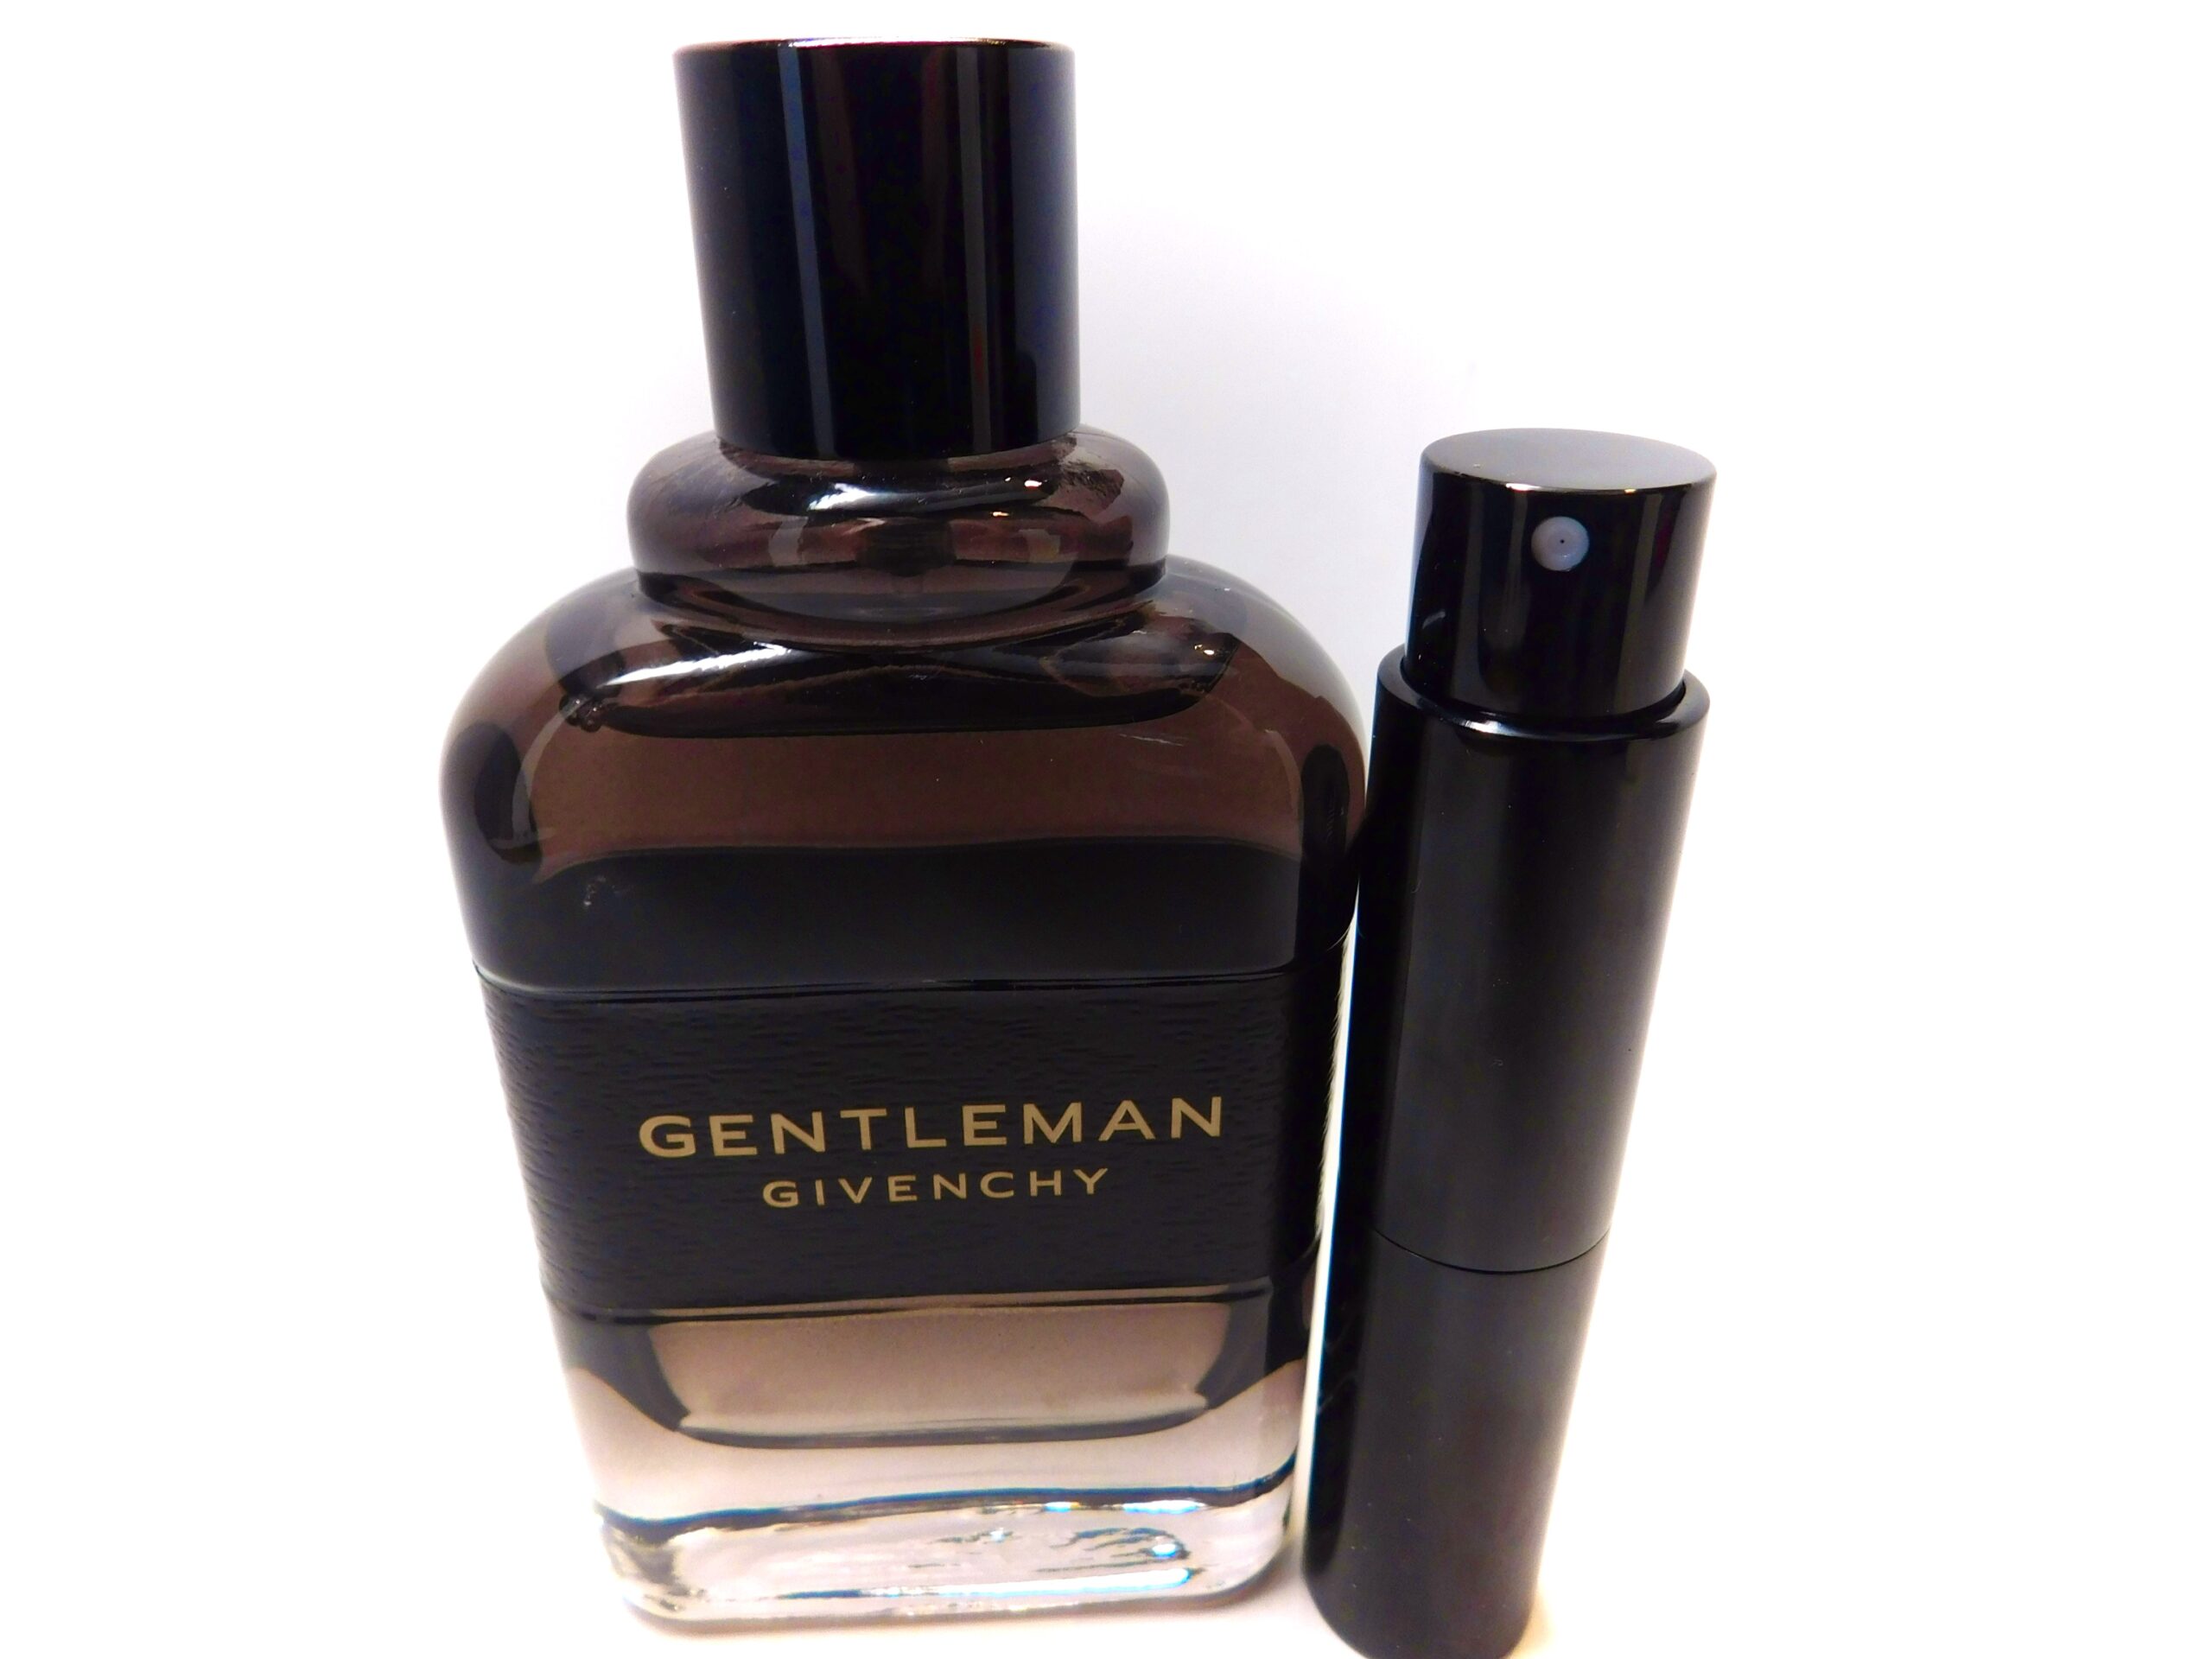 rich gentleman perfume